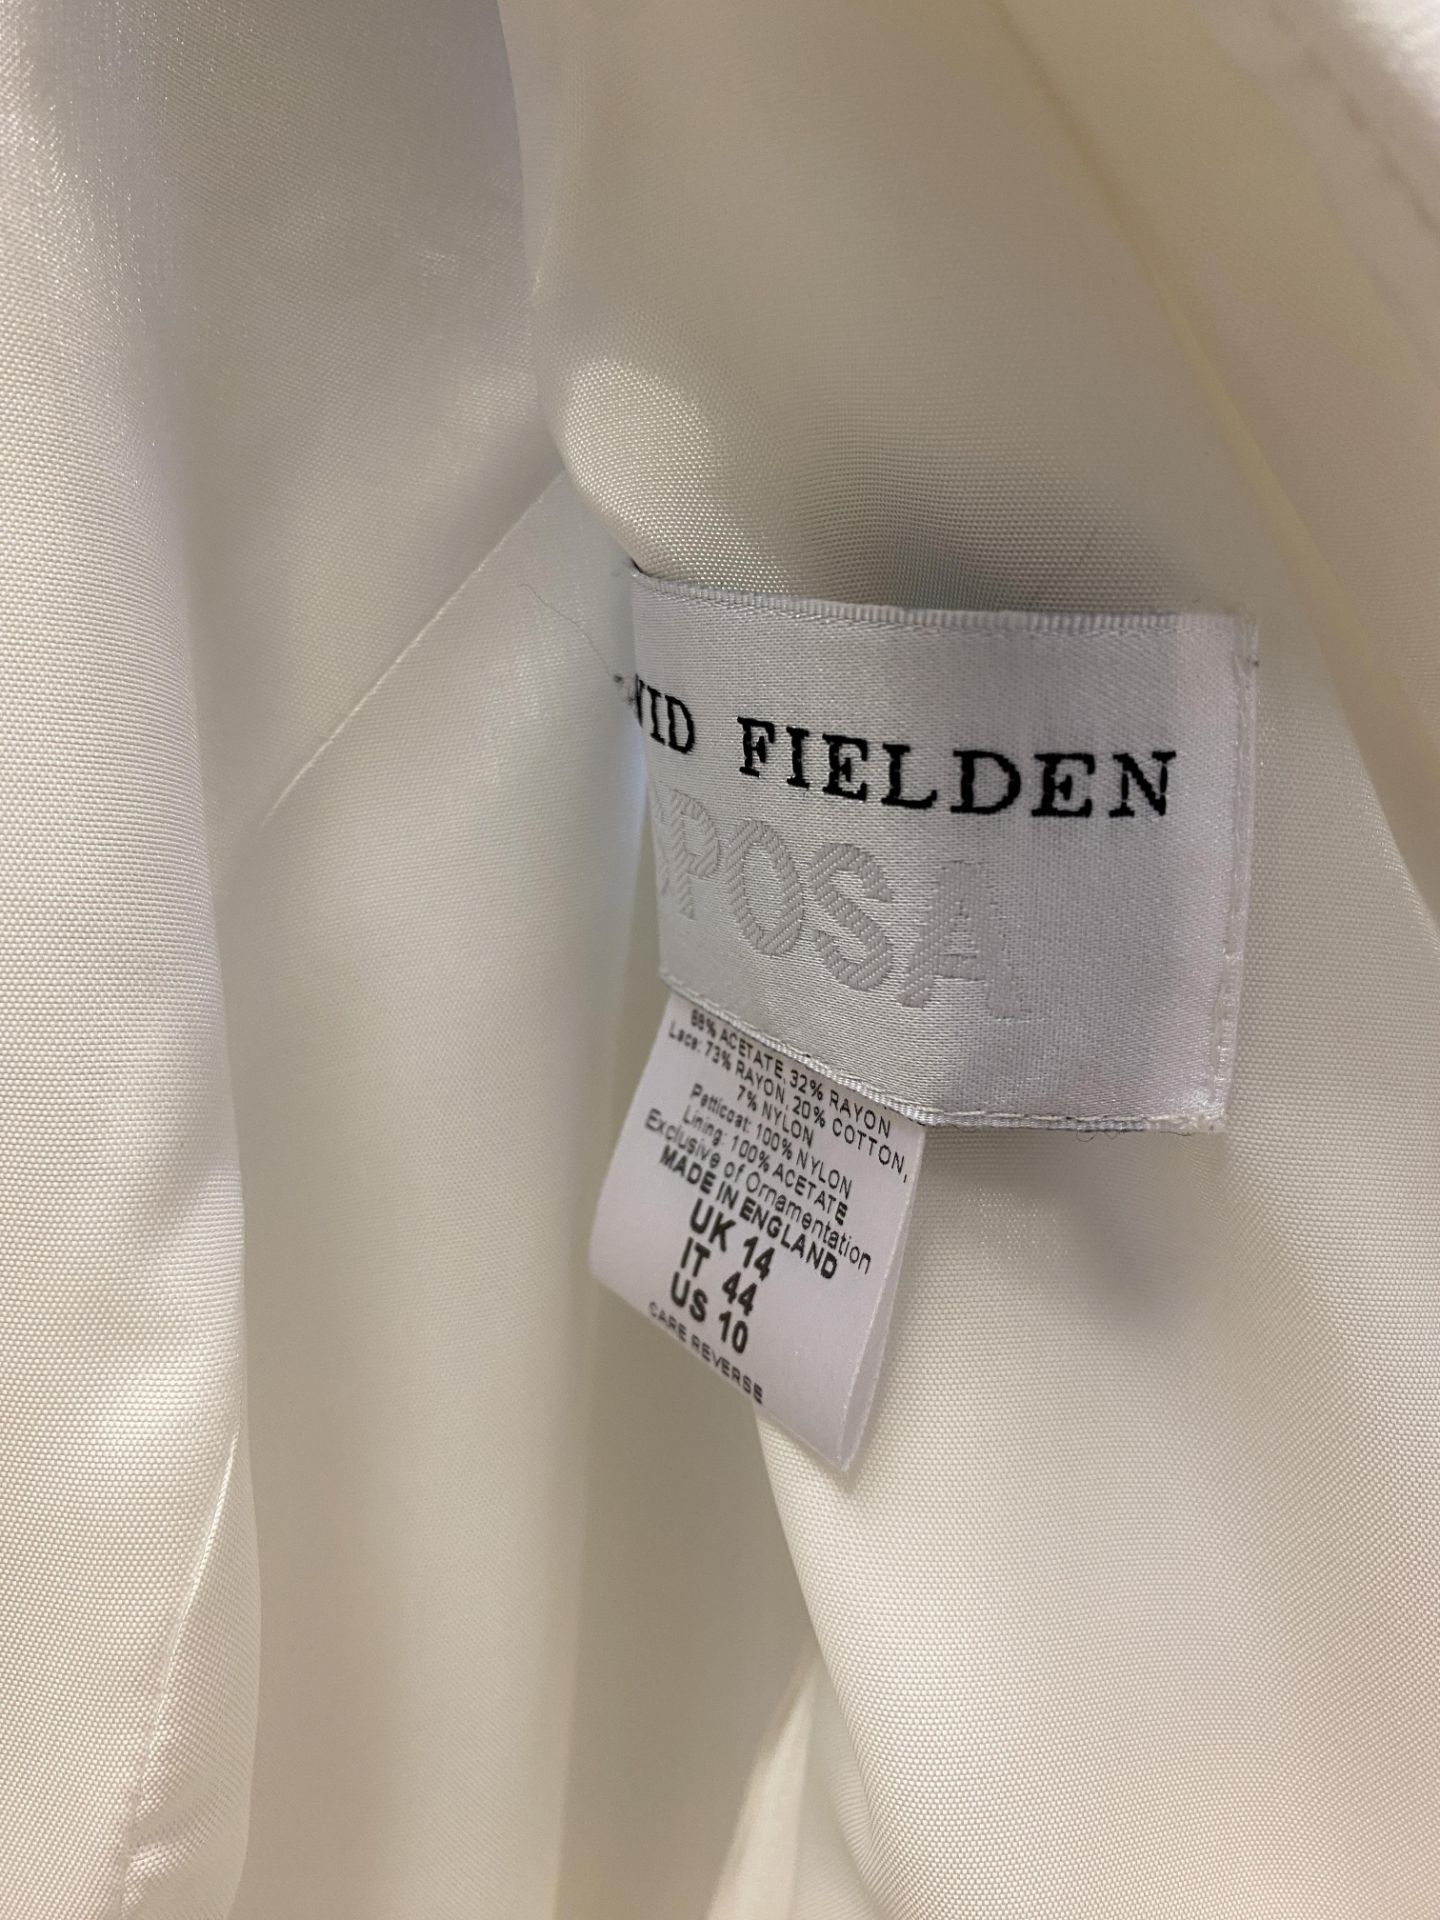 1 x DAVID FIELDEN '8816' Jewel Neck Full Skirted Designer Wedding Dress RRP £2,850 UK 12 - Image 5 of 9